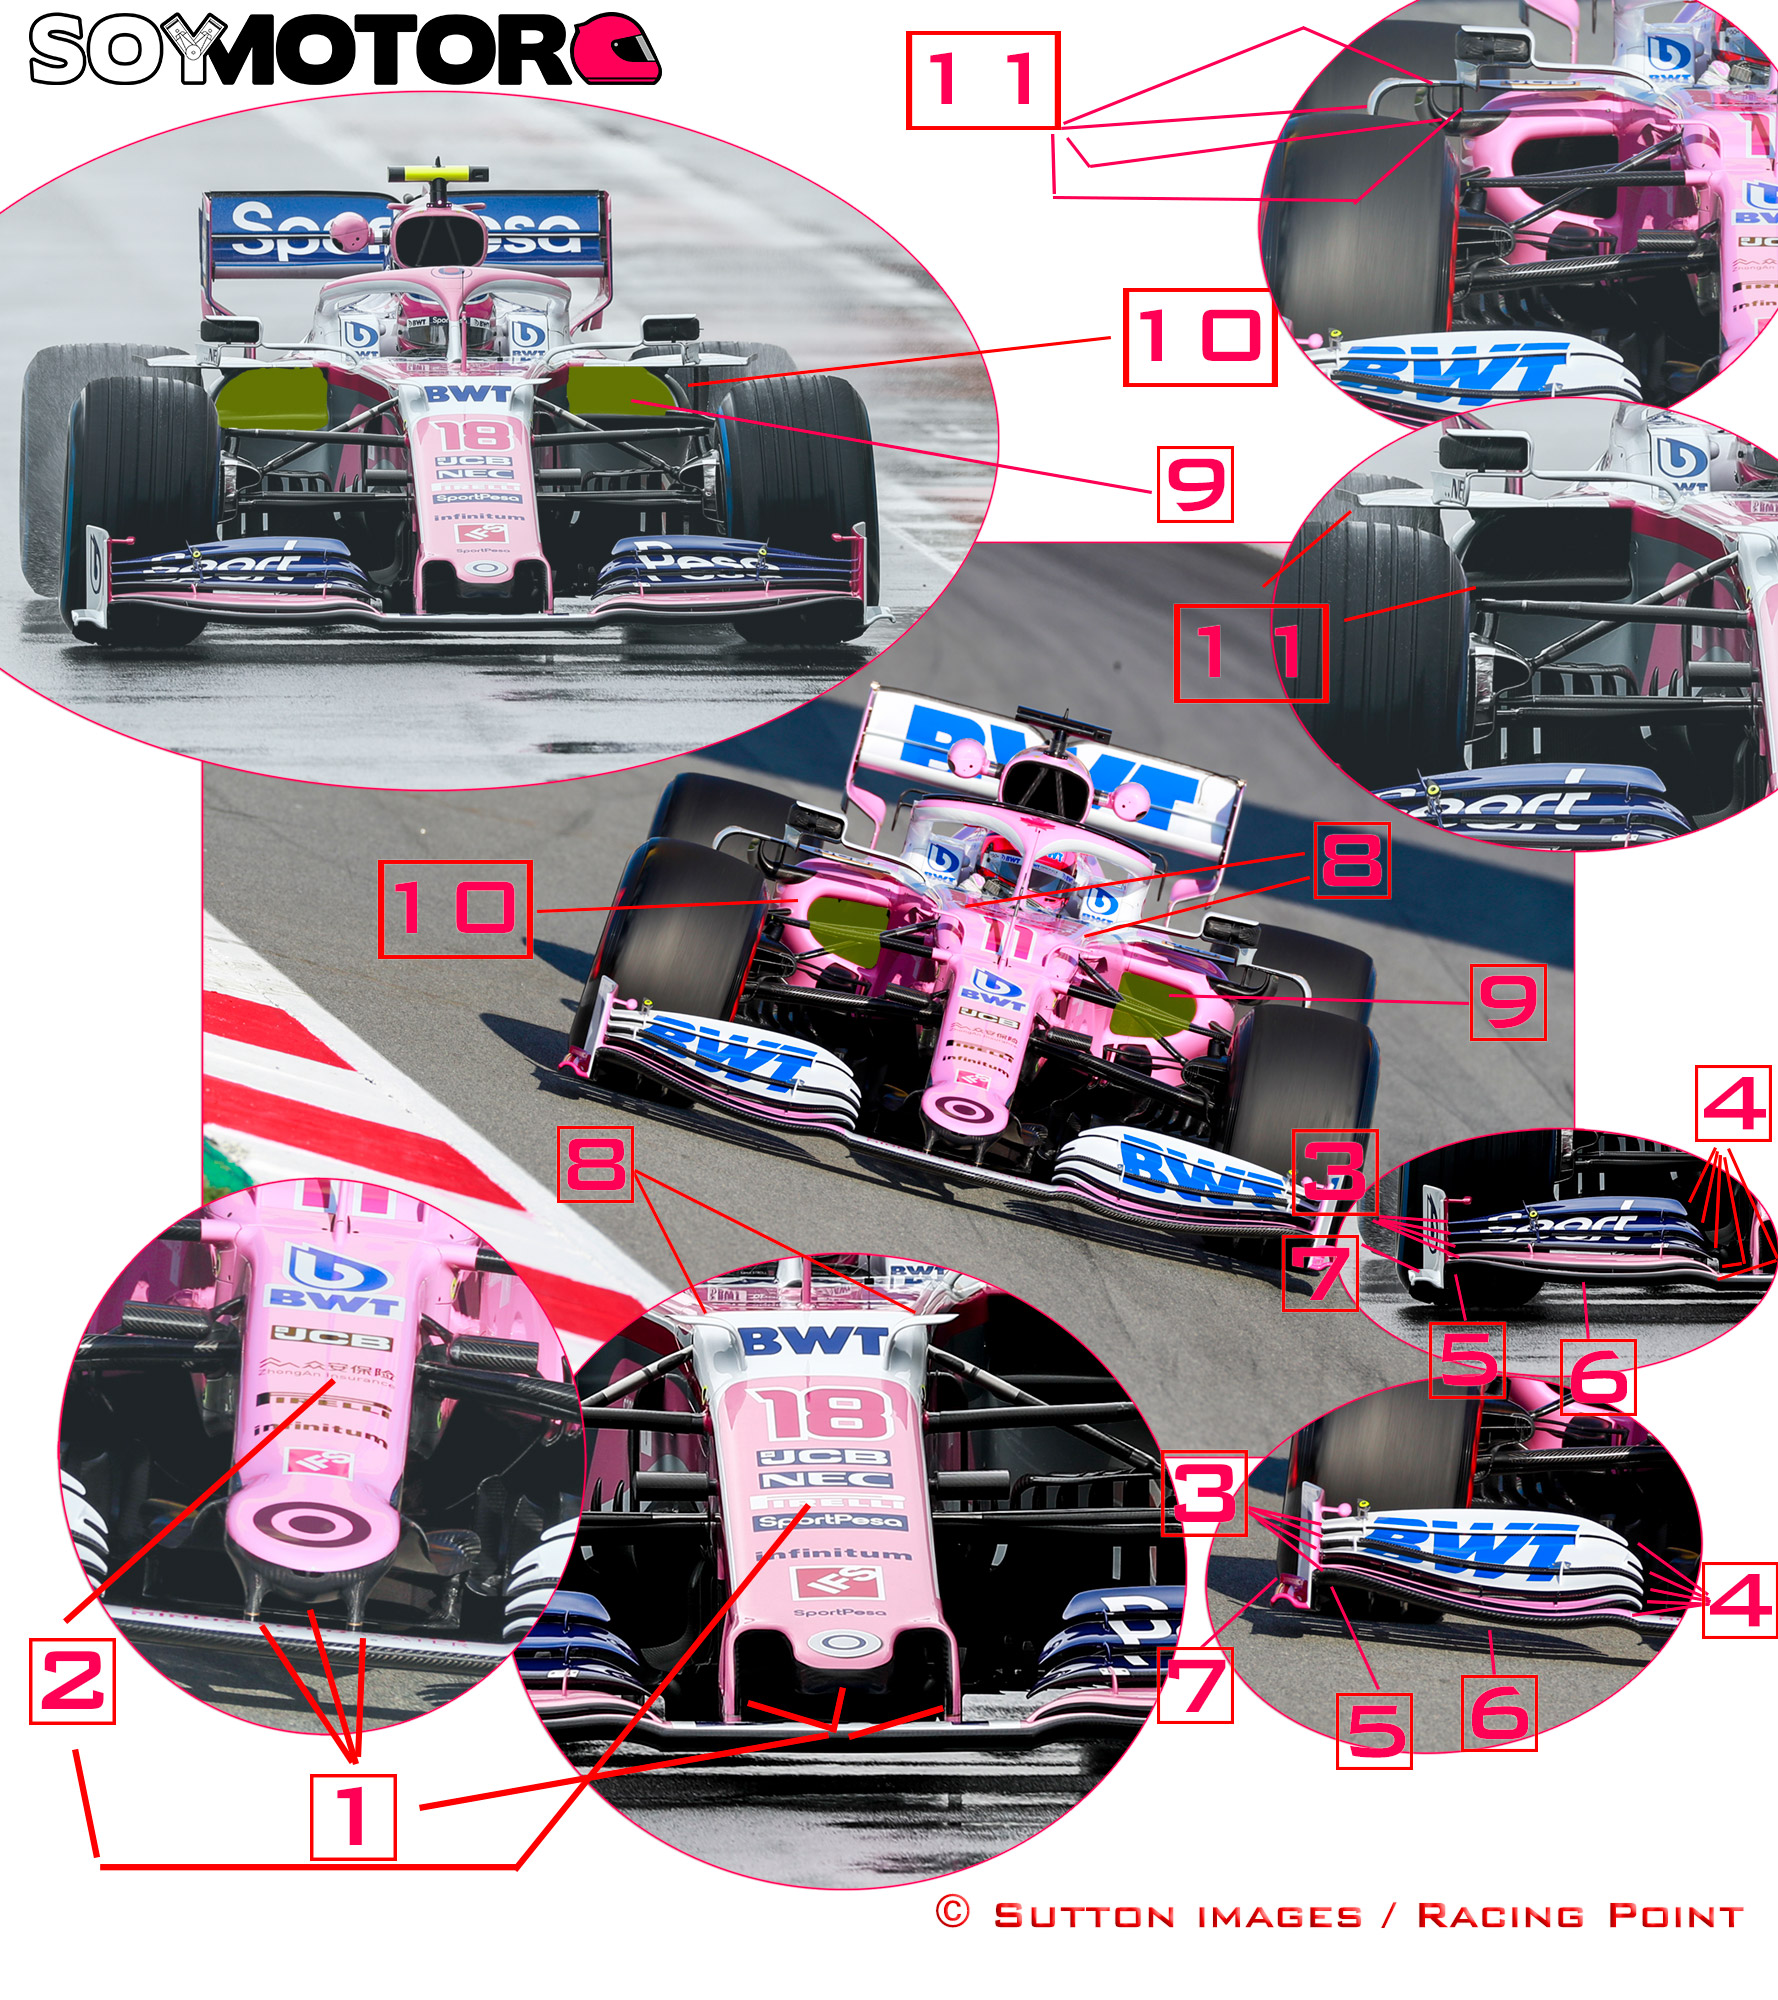 racing-point-frontal-1-soymotor.jpg